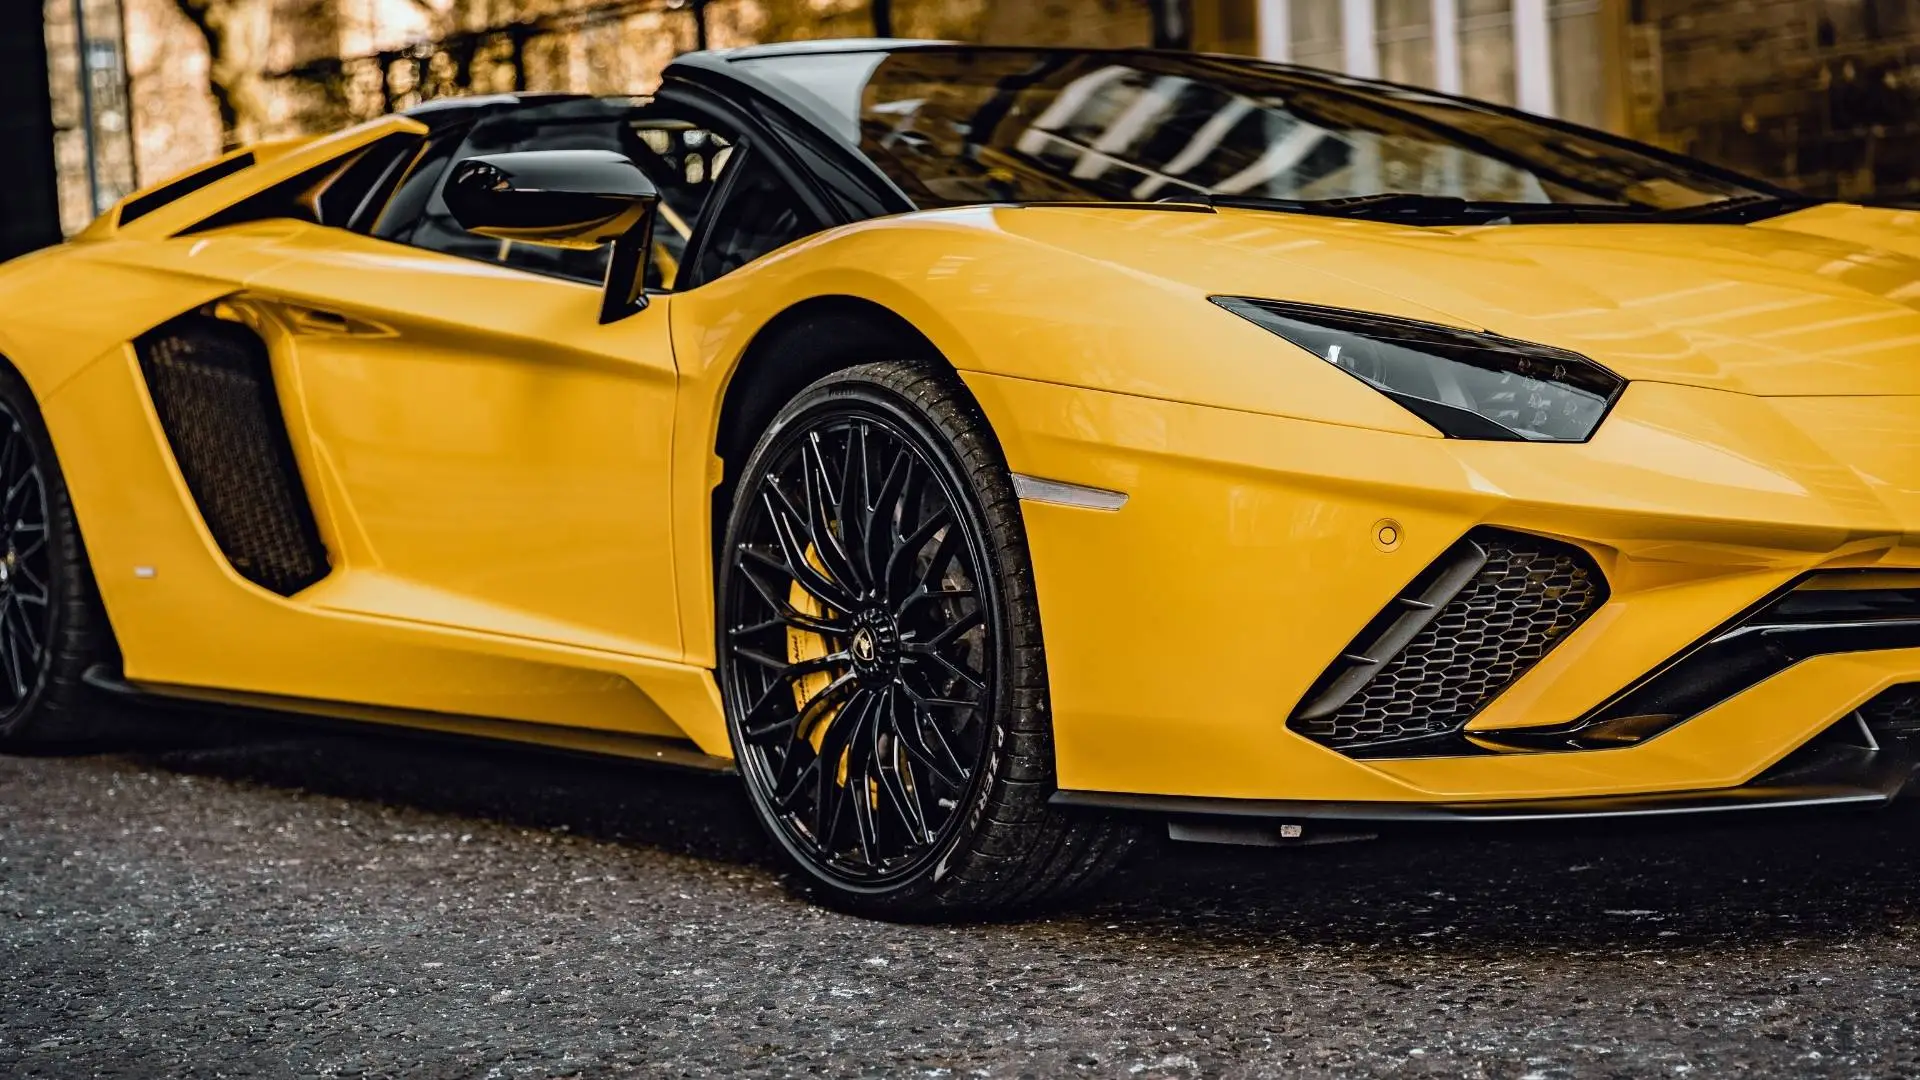 Harga Mobil Lamborghini Aventador